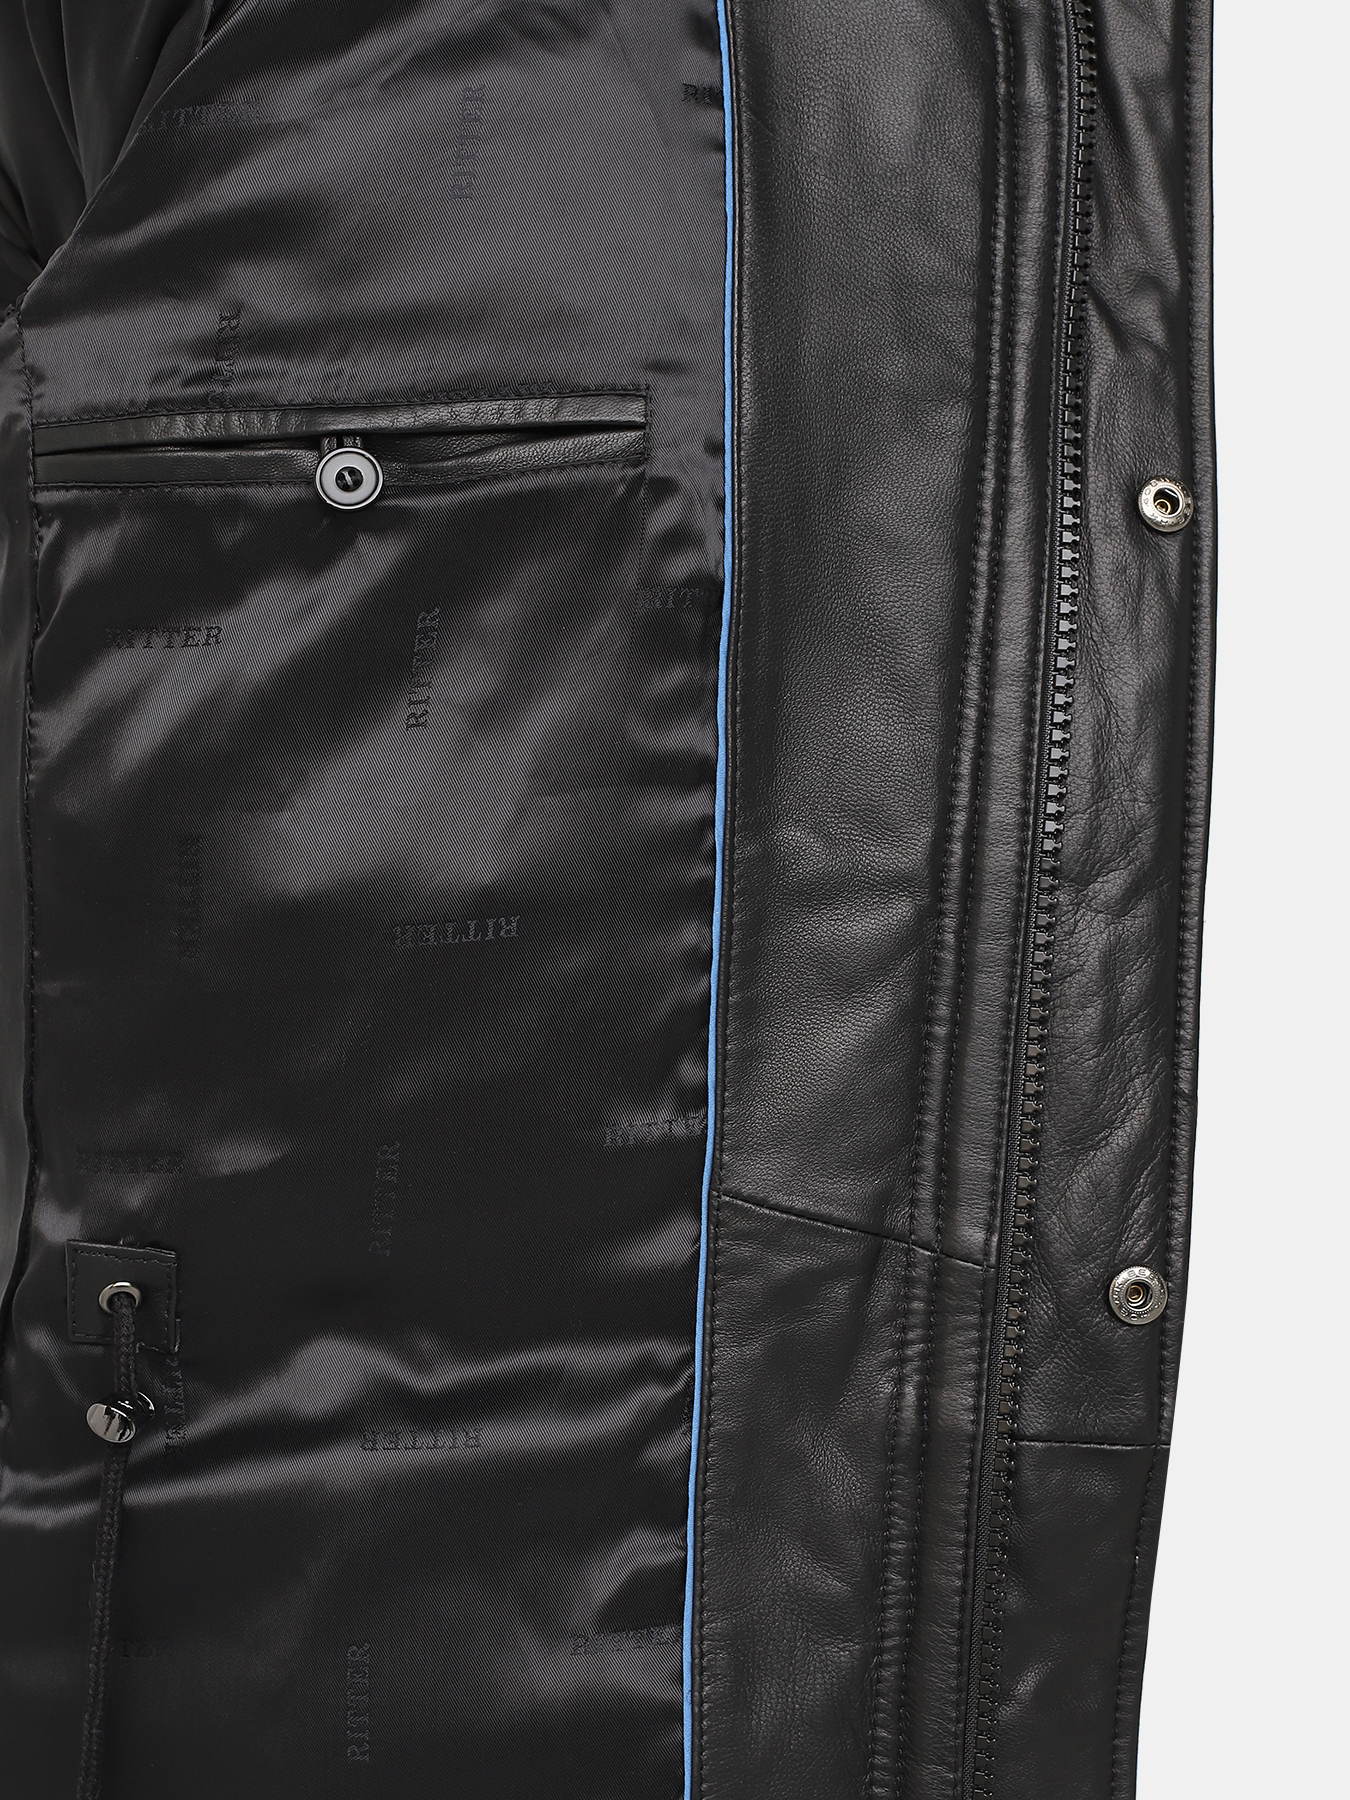 Кожаная куртка Ritter 390990-031, цвет черный, размер 60 - фото 3